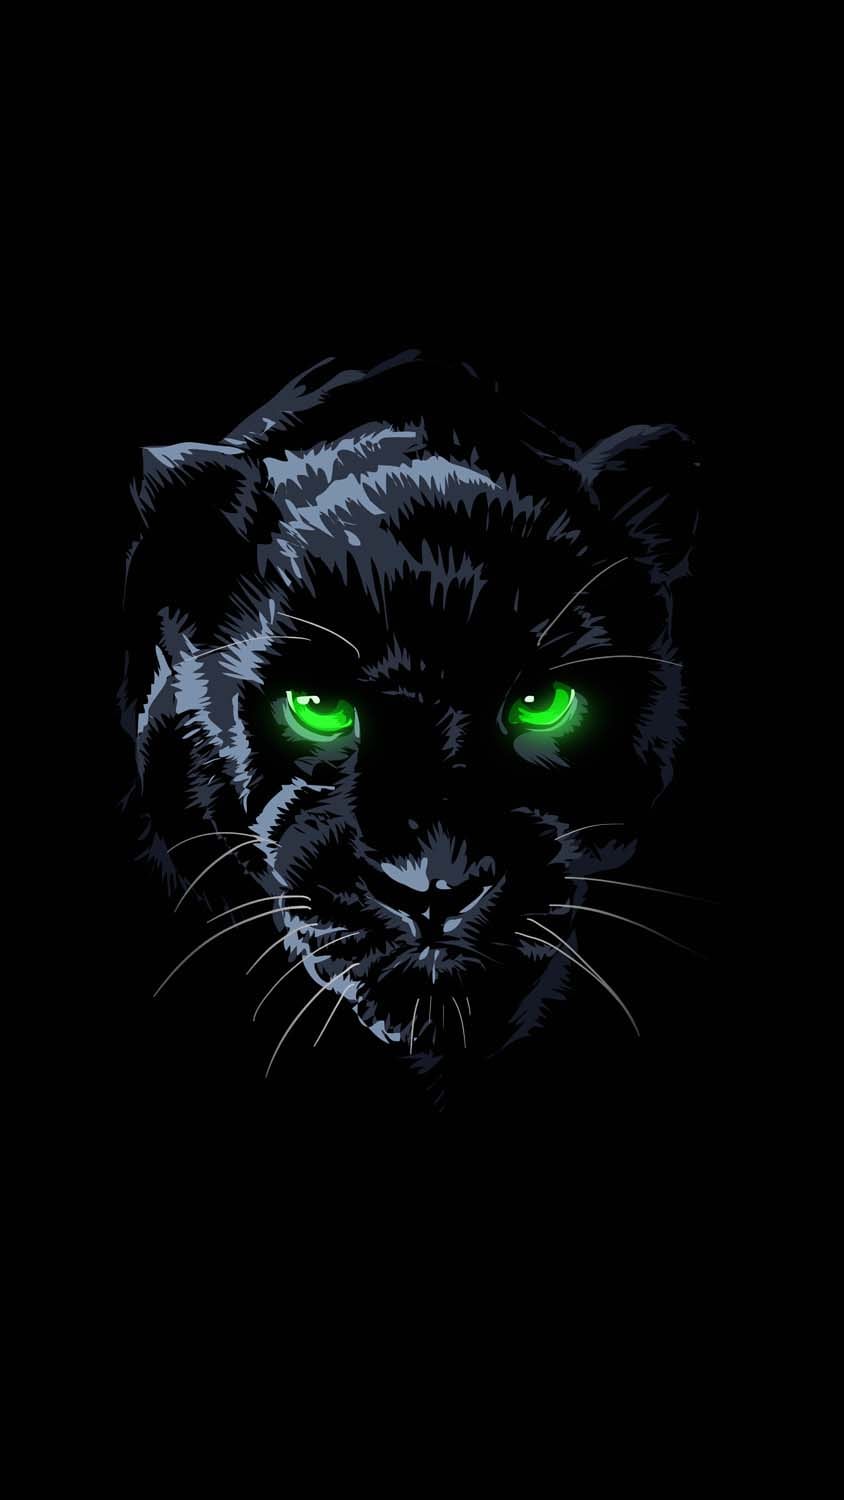 Black Panther in Dark iPhone Wallpaper HD